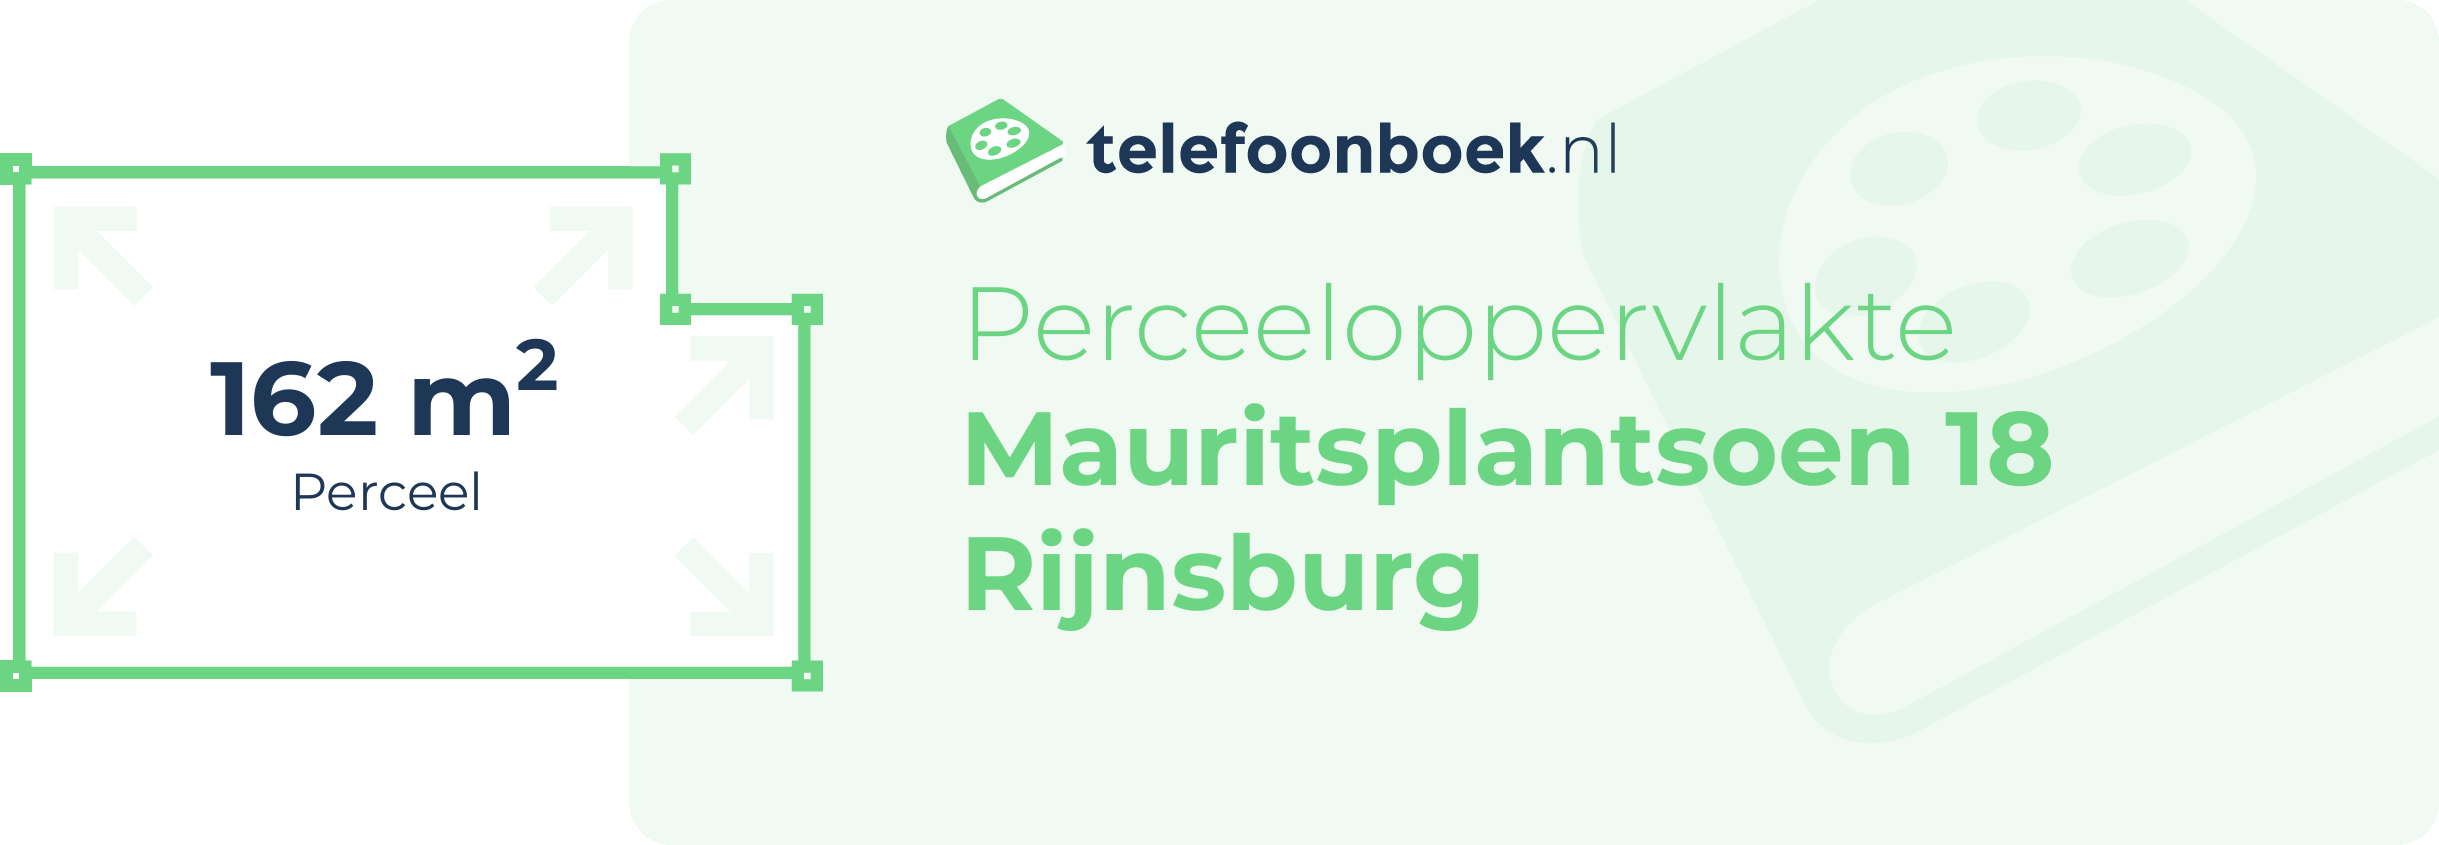 Perceeloppervlakte Mauritsplantsoen 18 Rijnsburg